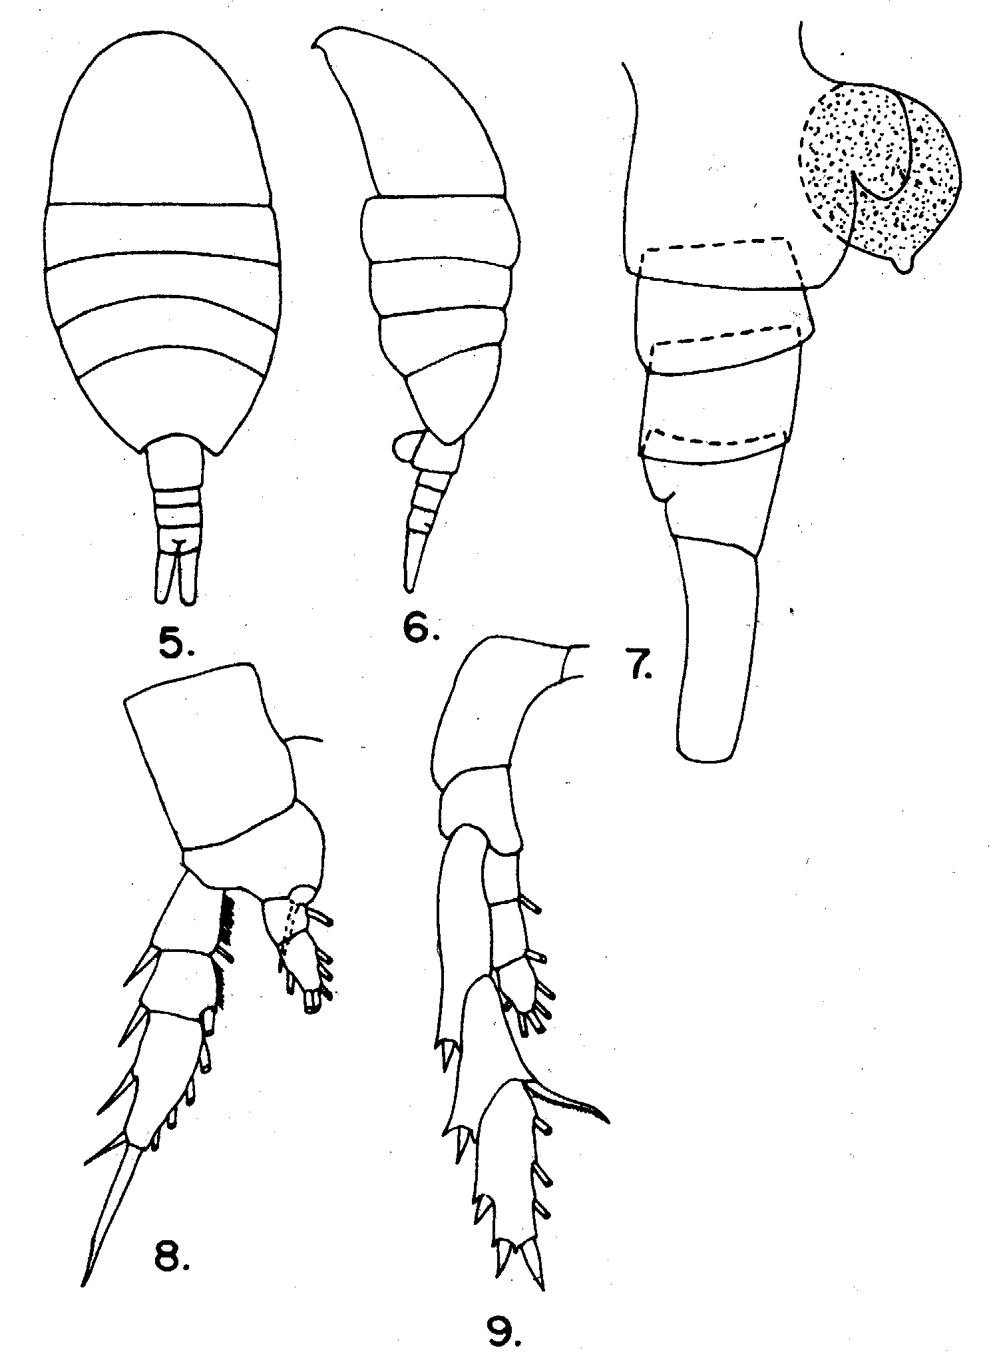 Species Lucicutia gaussae - Plate 10 of morphological figures